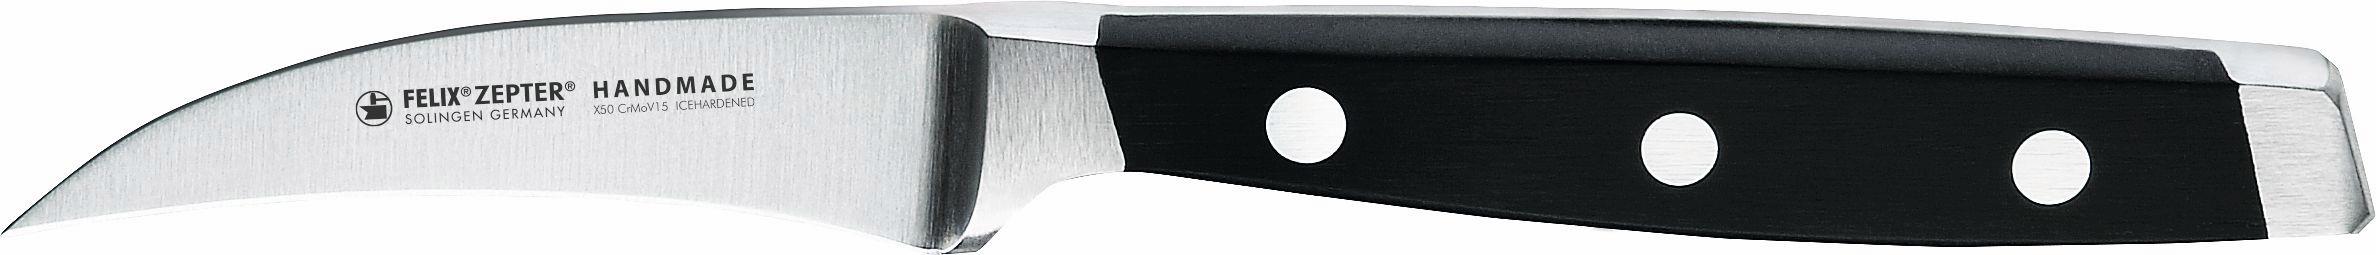 FELIX SOLINGEN 811307 FIRST CLASS Schälmesser – 7cm Schneide aus Klingen-Stahl - Made in Germany